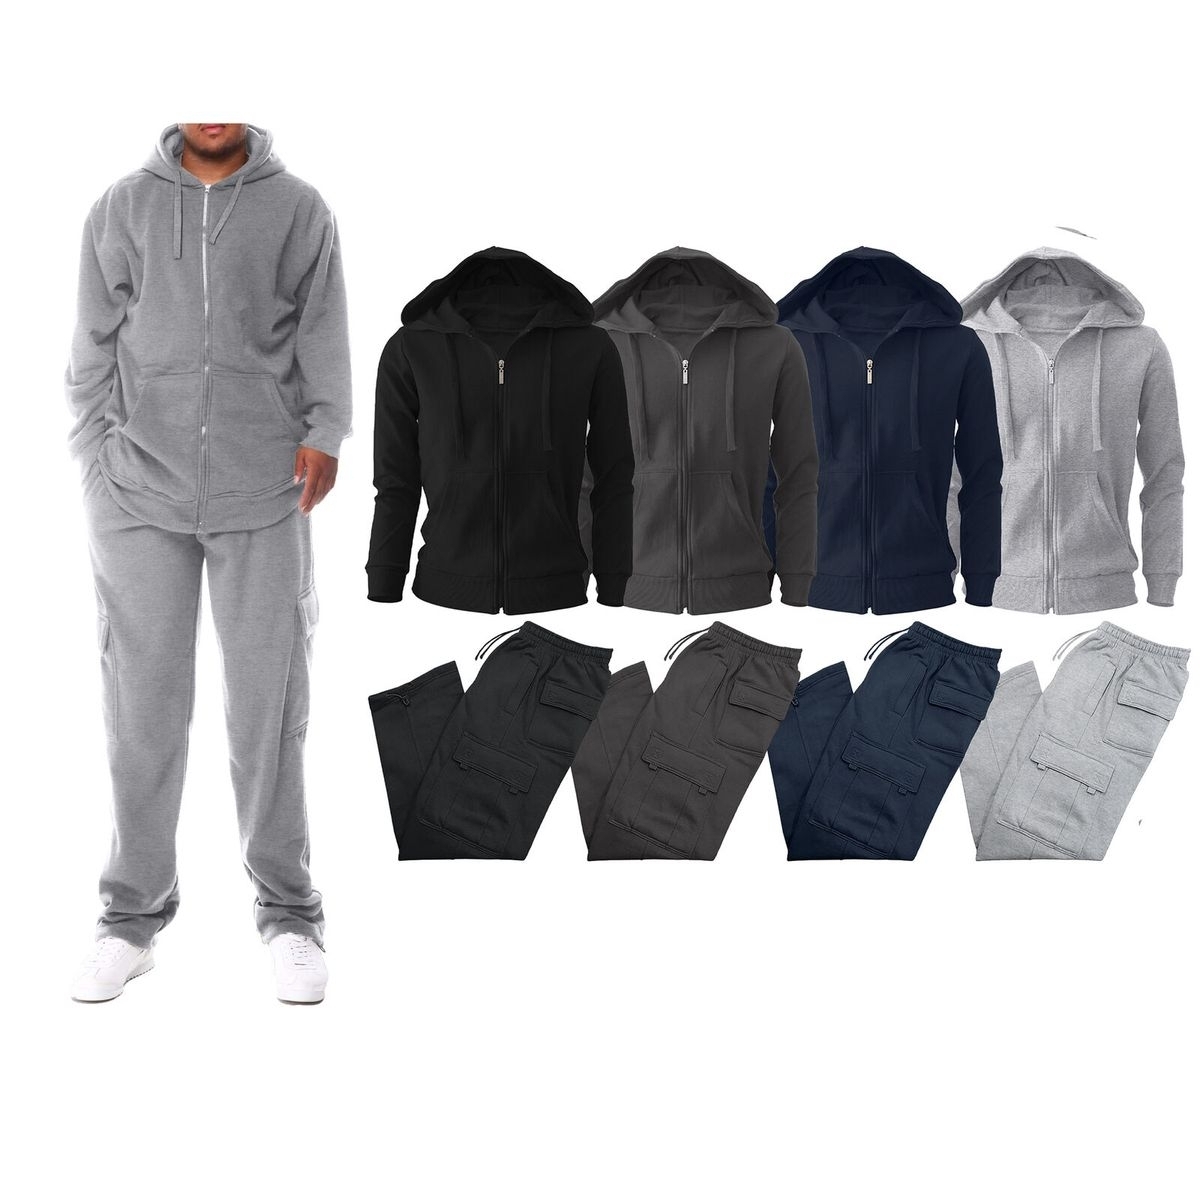 Multi-Pack: Men's Big & Tall Winter Warm Athletic Active Cozy Fleece Lined Multi-Pocket Full Zip Up Cargo Tracksuit - Black, 1-pack, Medium